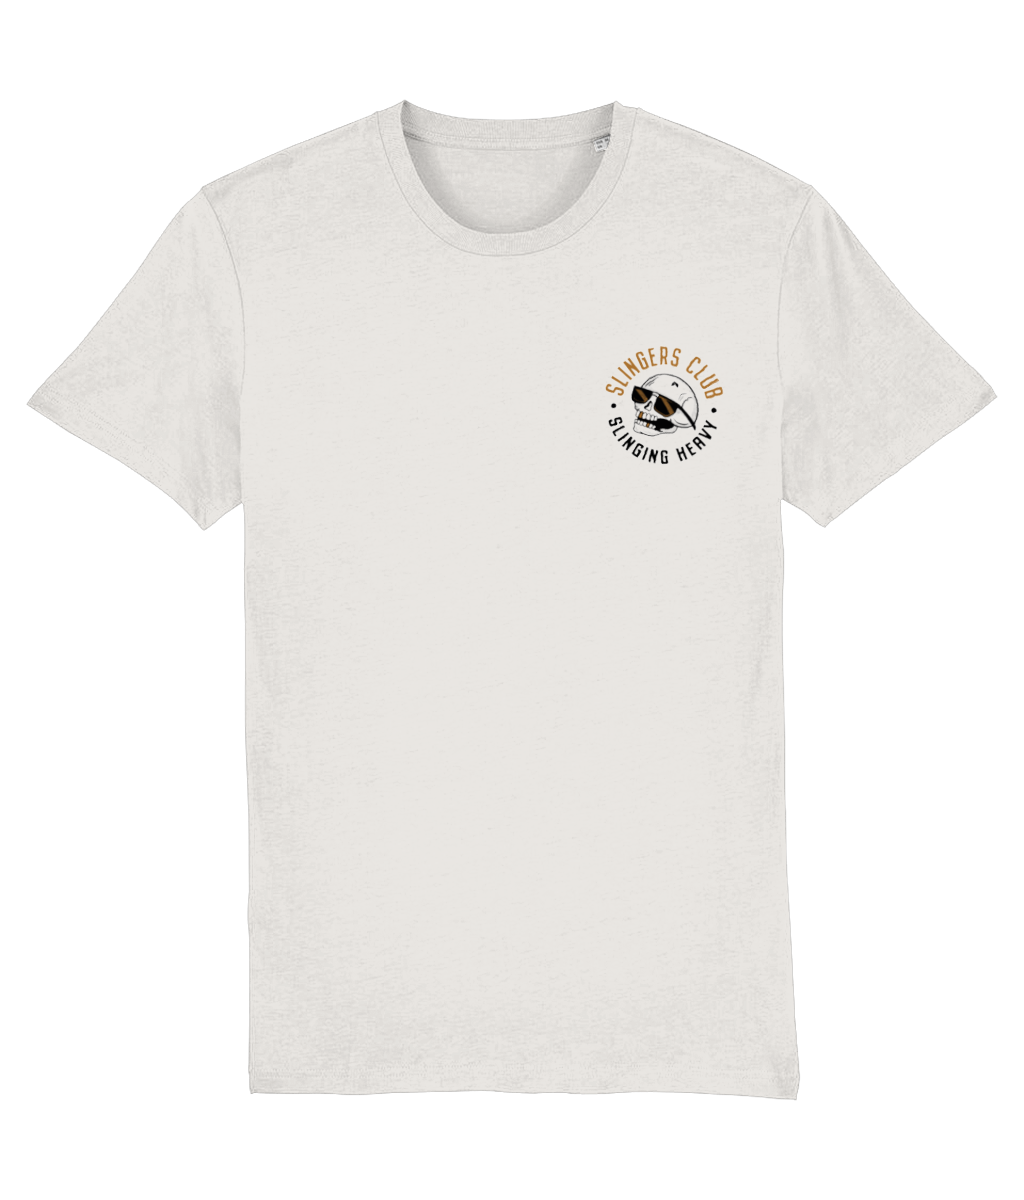 Successorize t-shirt - Slingers Club